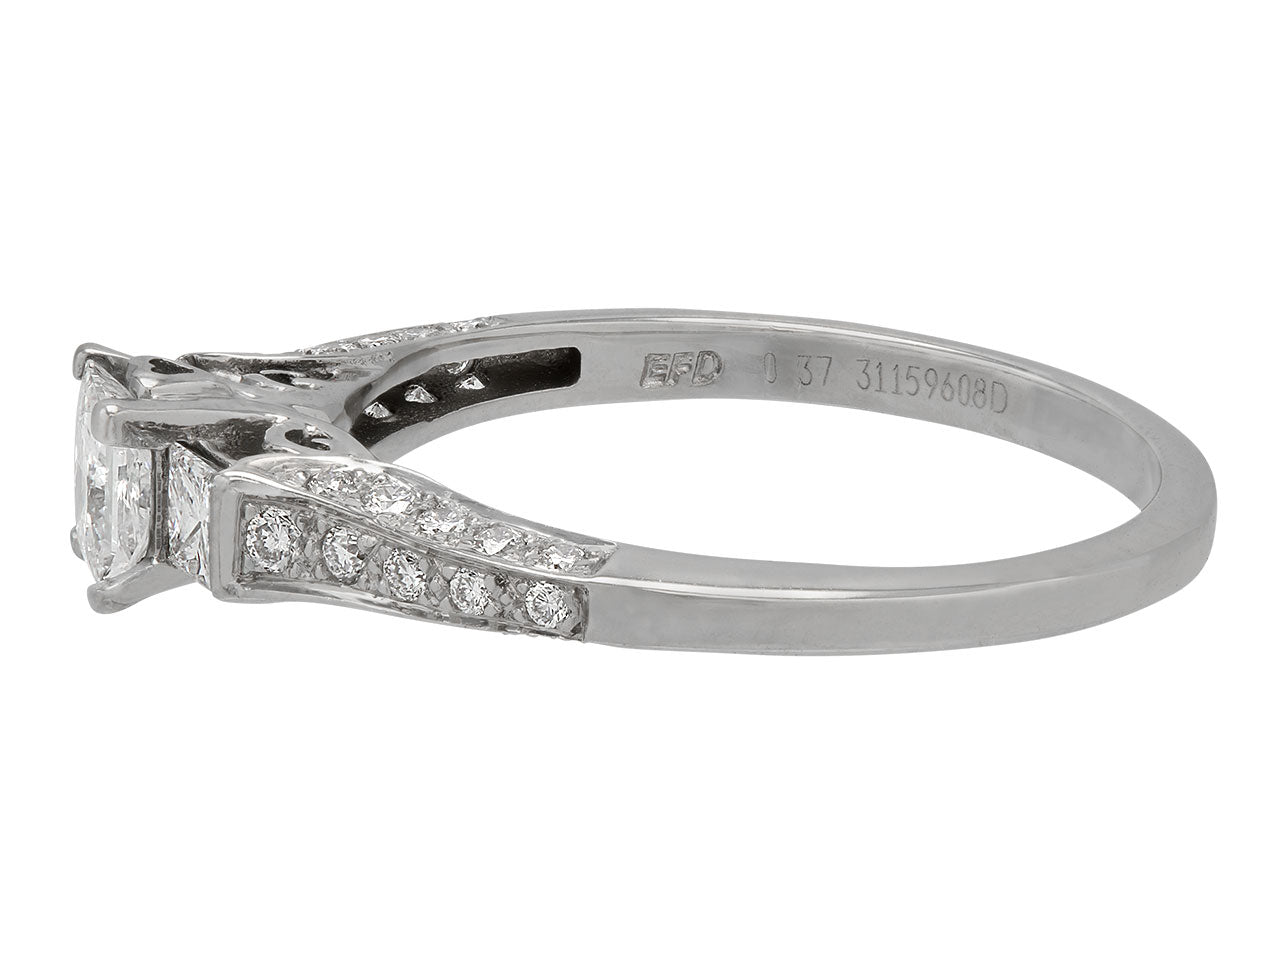 Princess-cut Diamond Ring in 18K Gold